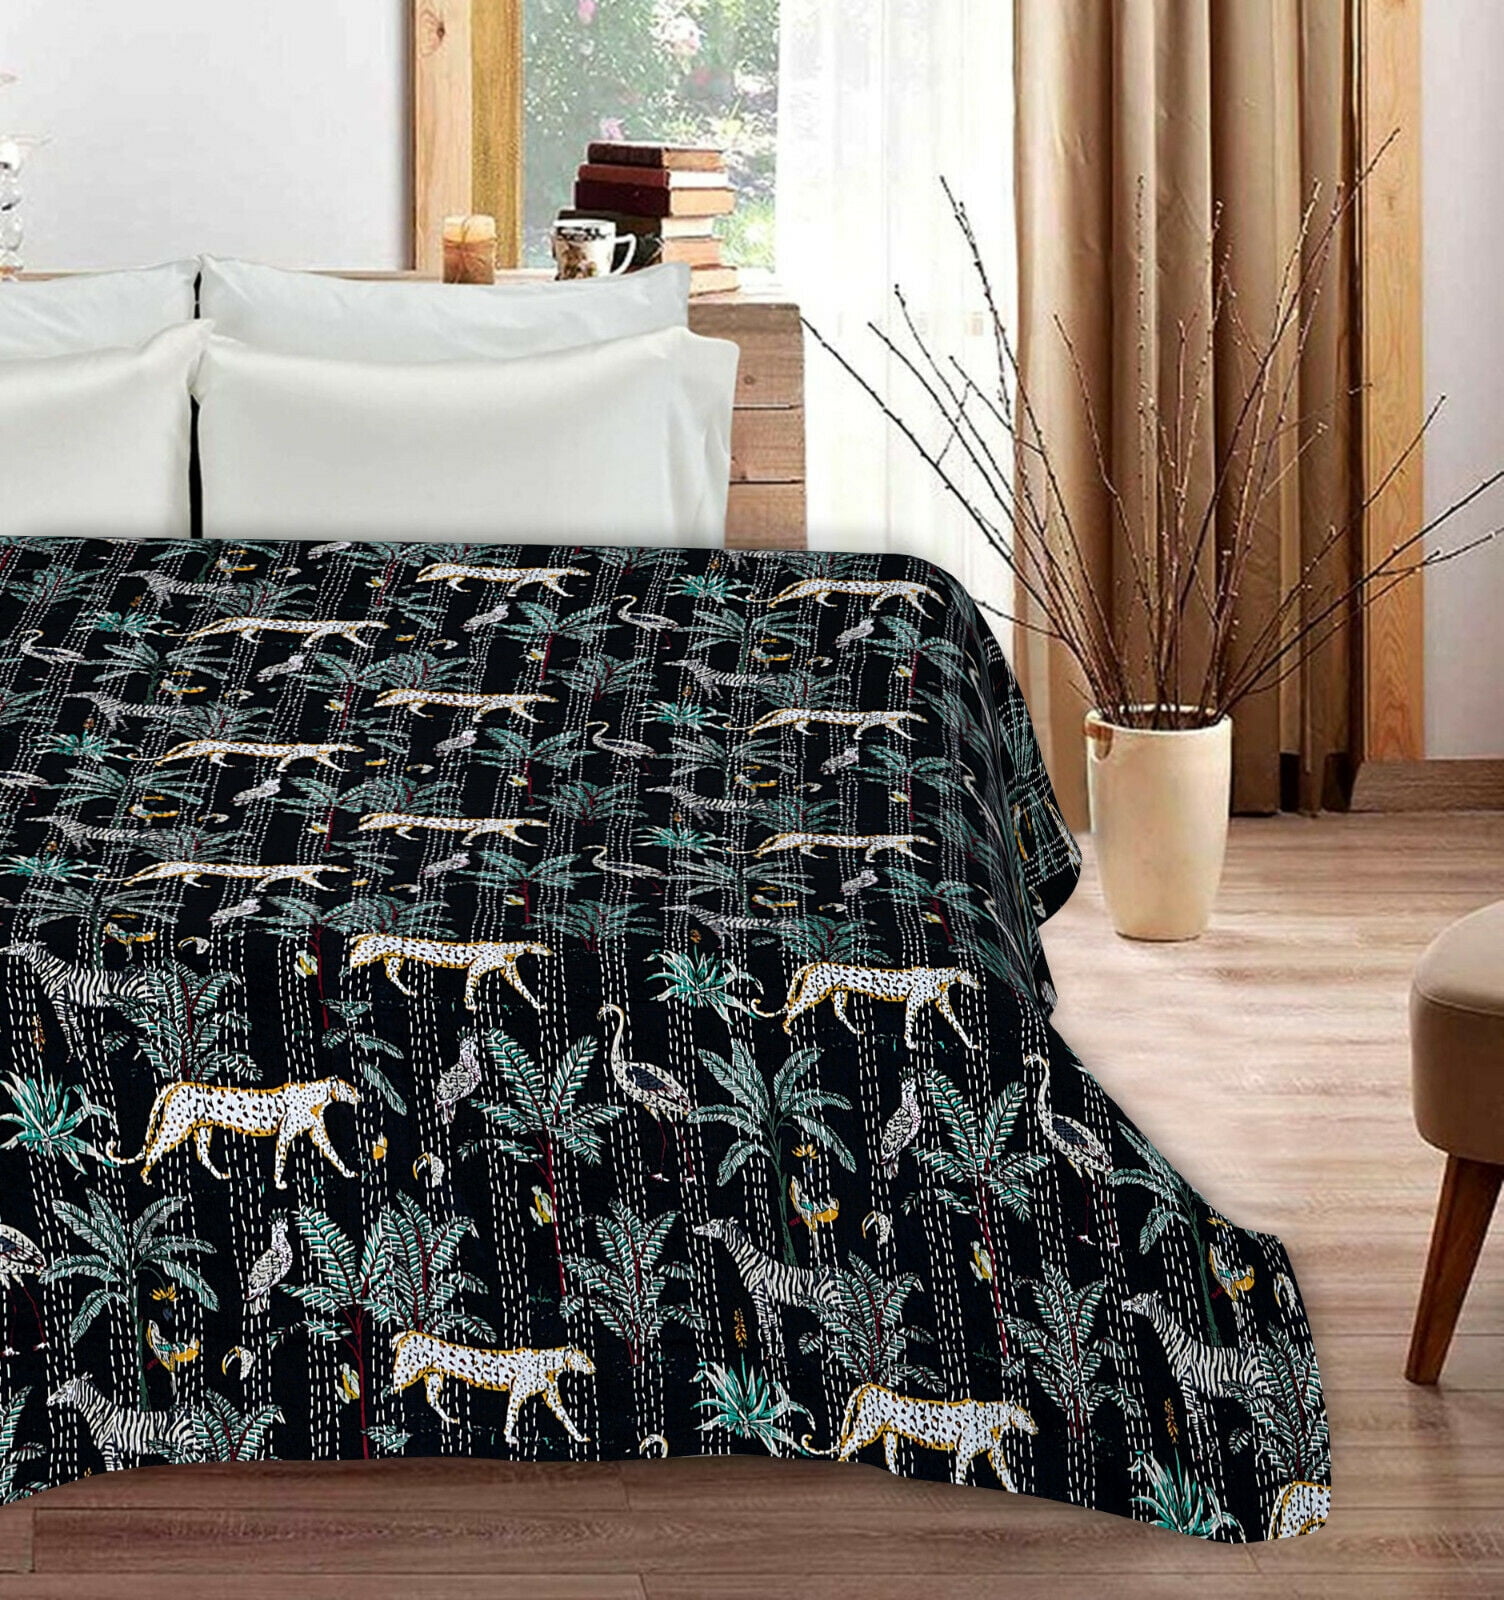 Handmade Indian Bedcover Queen Size Kantha Quilt Throw Cotton Blanket Bedspread 